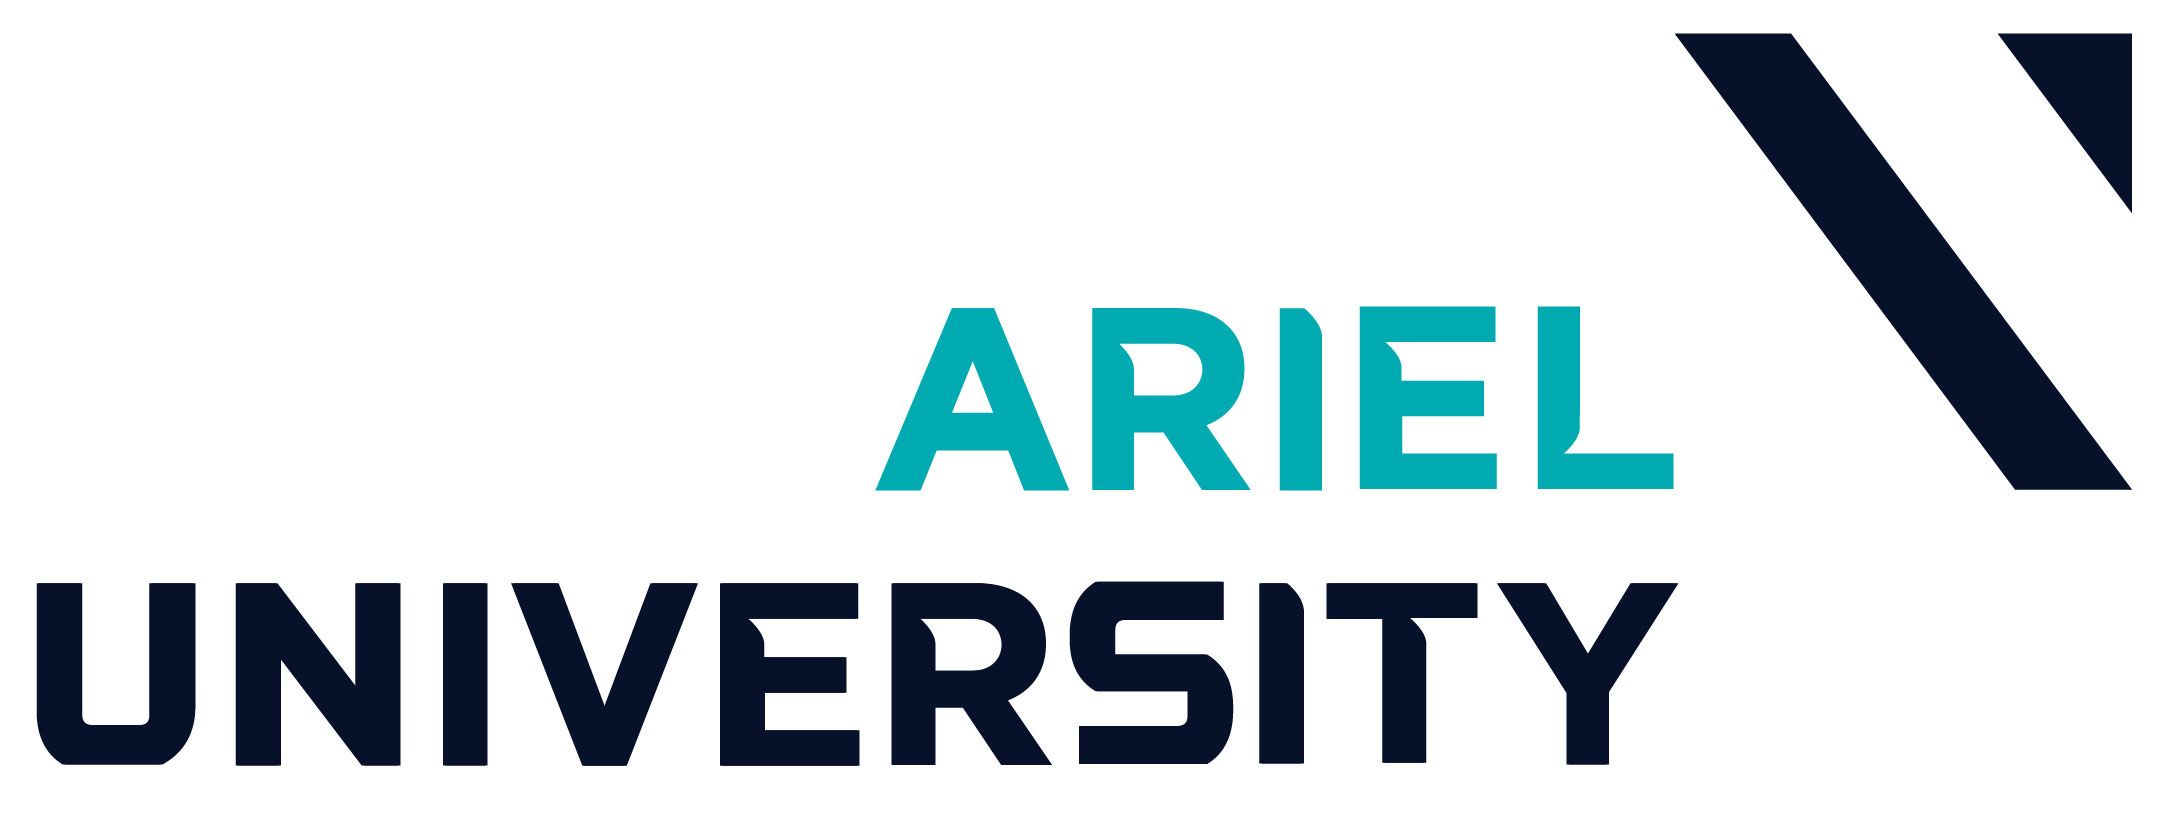 ariel-university-31483833